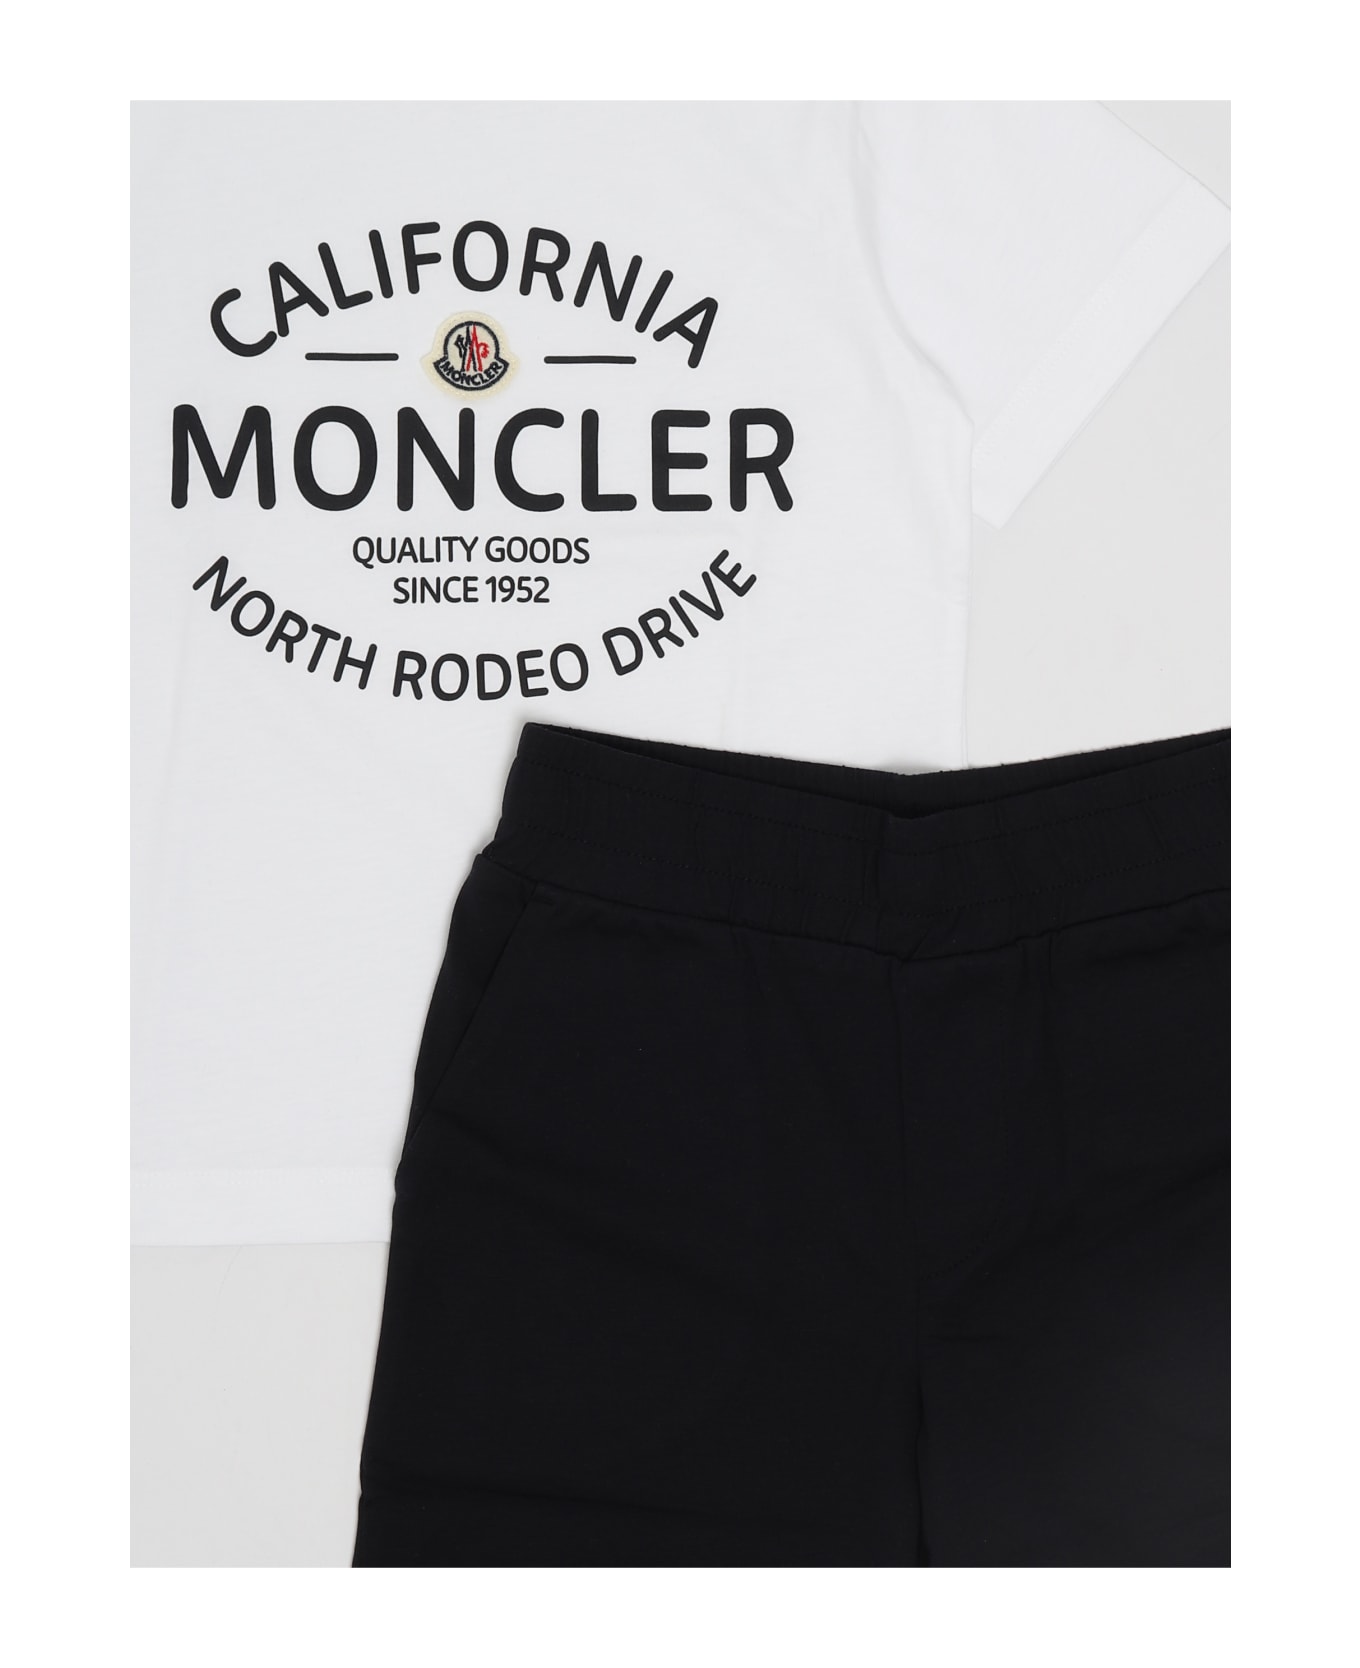 Moncler T-shirt+shorts Suit - BIANCO-BLU